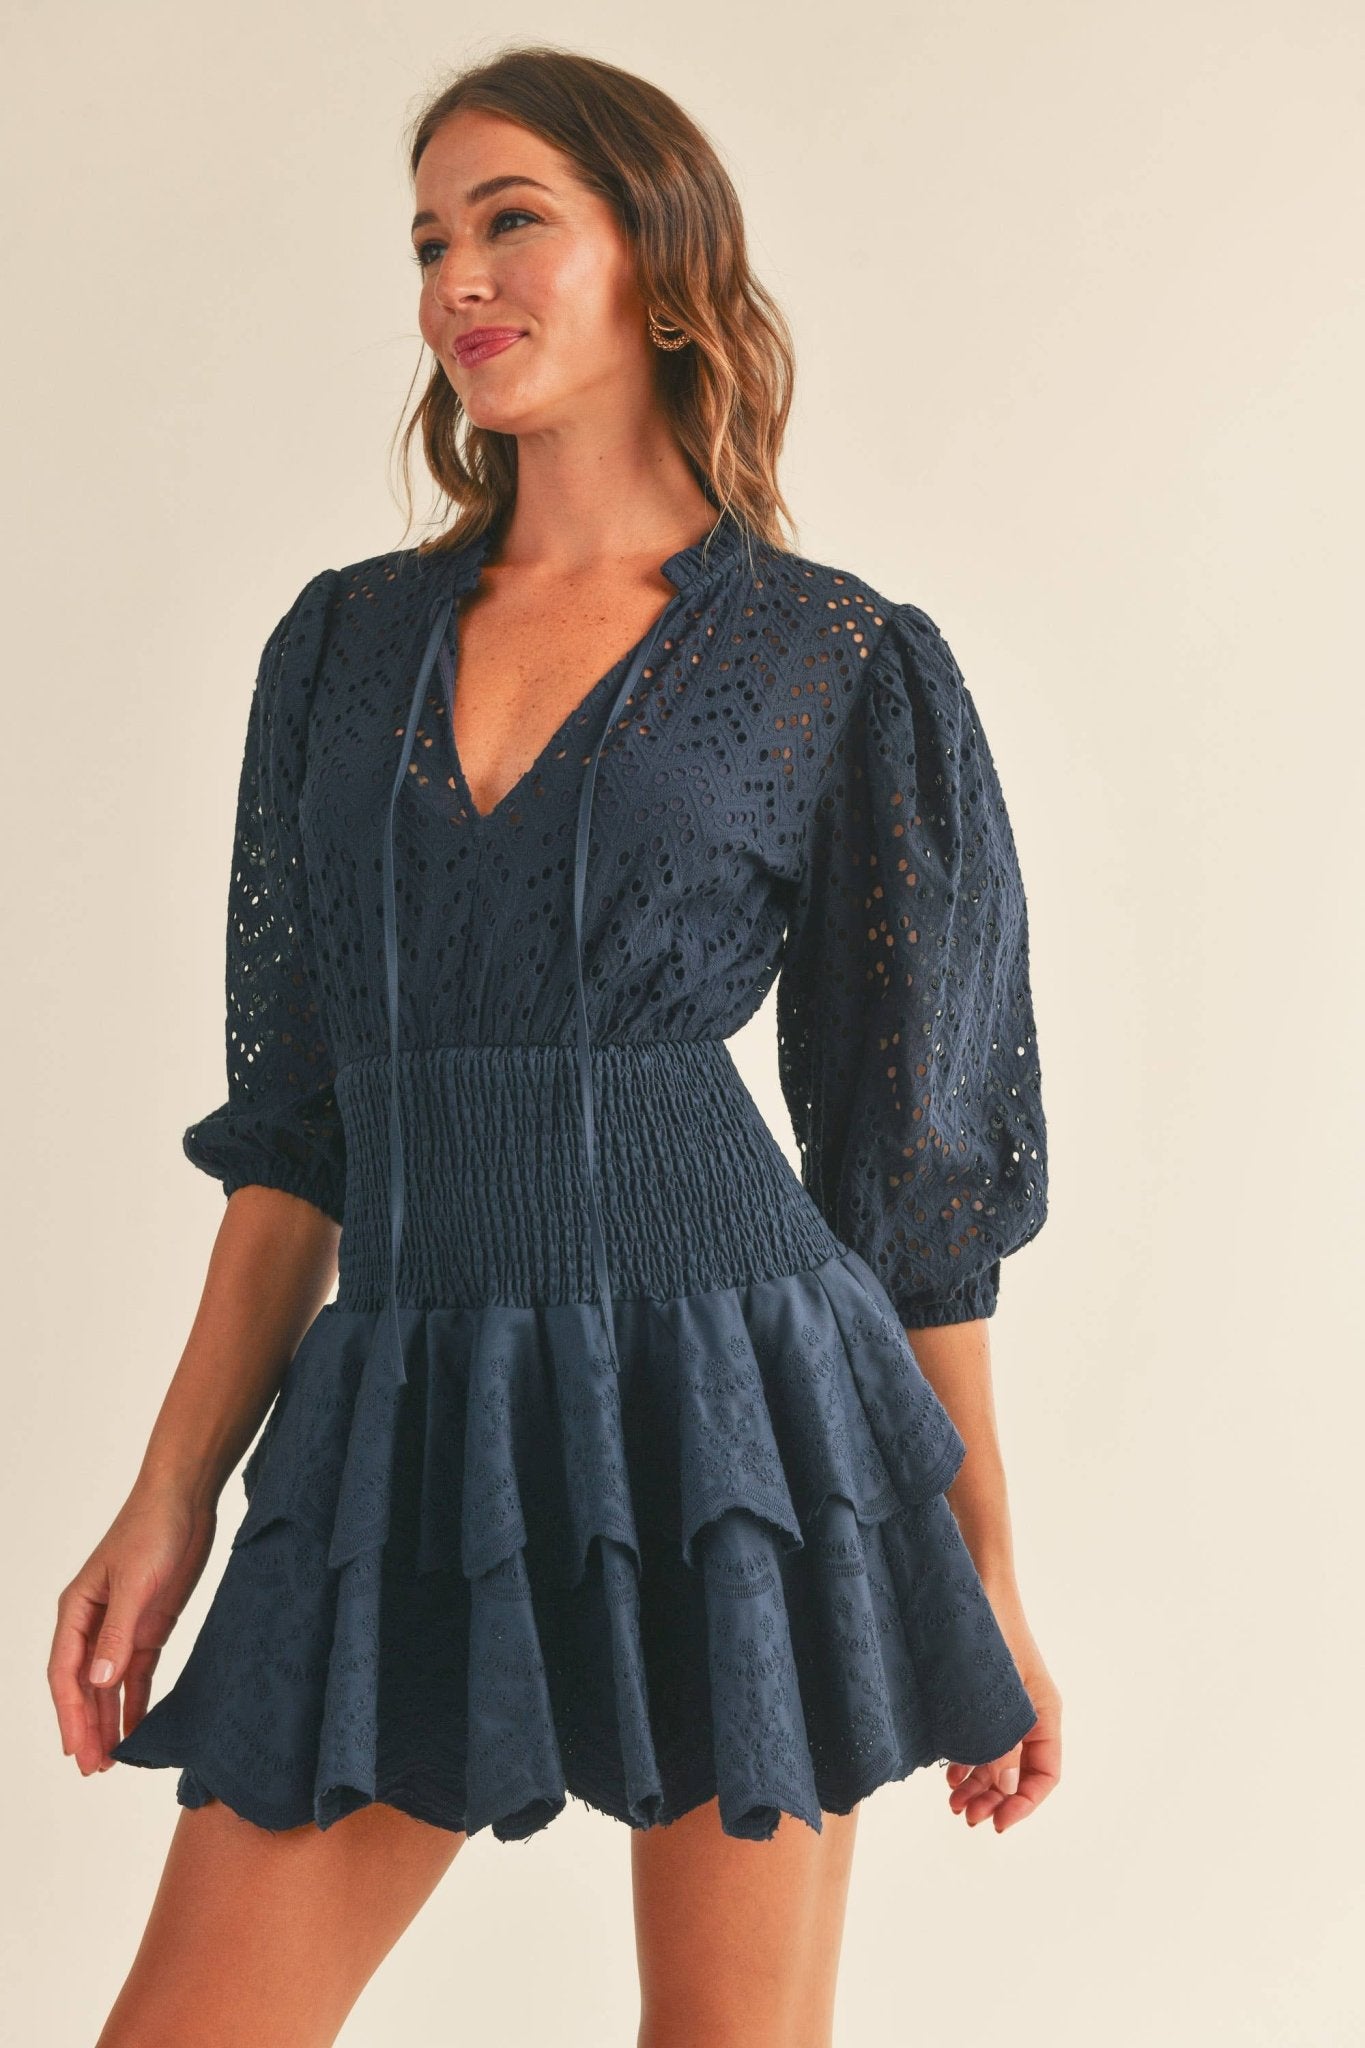 Sweet Autumn Smock Dress - Abigail Fox Designs